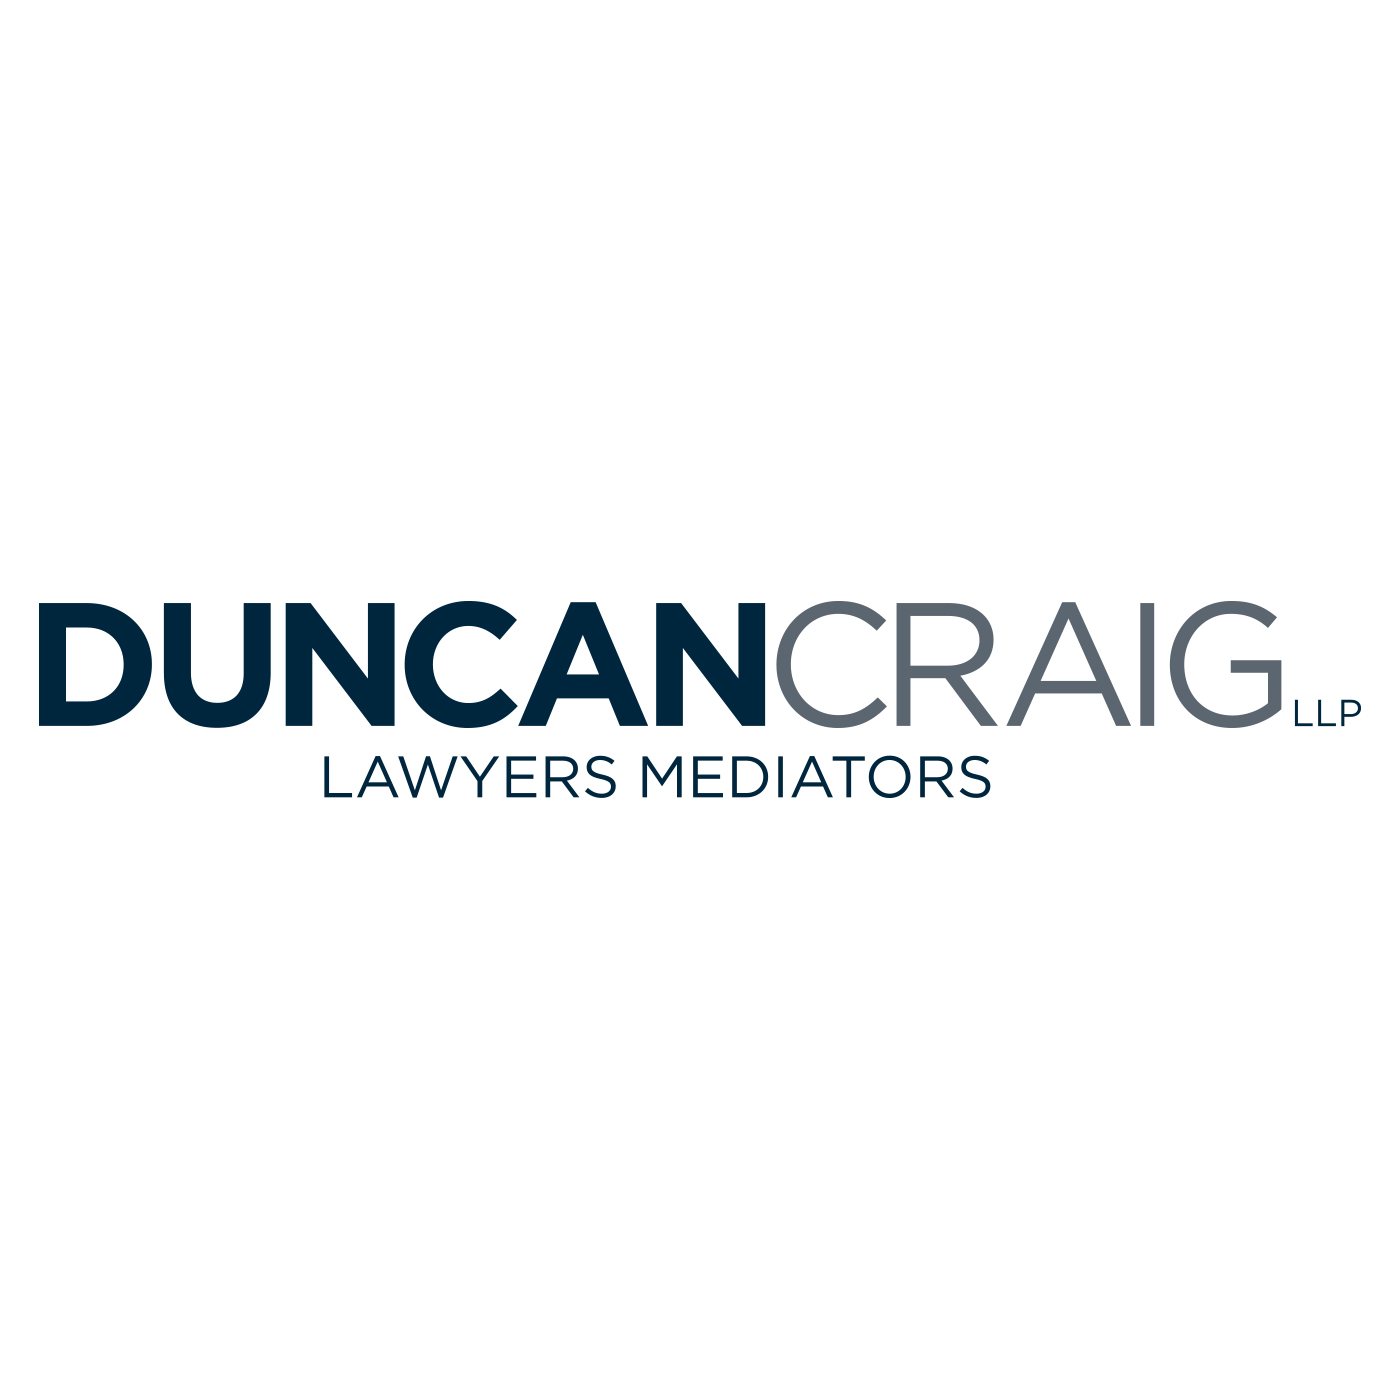 Duncan Craig LLP